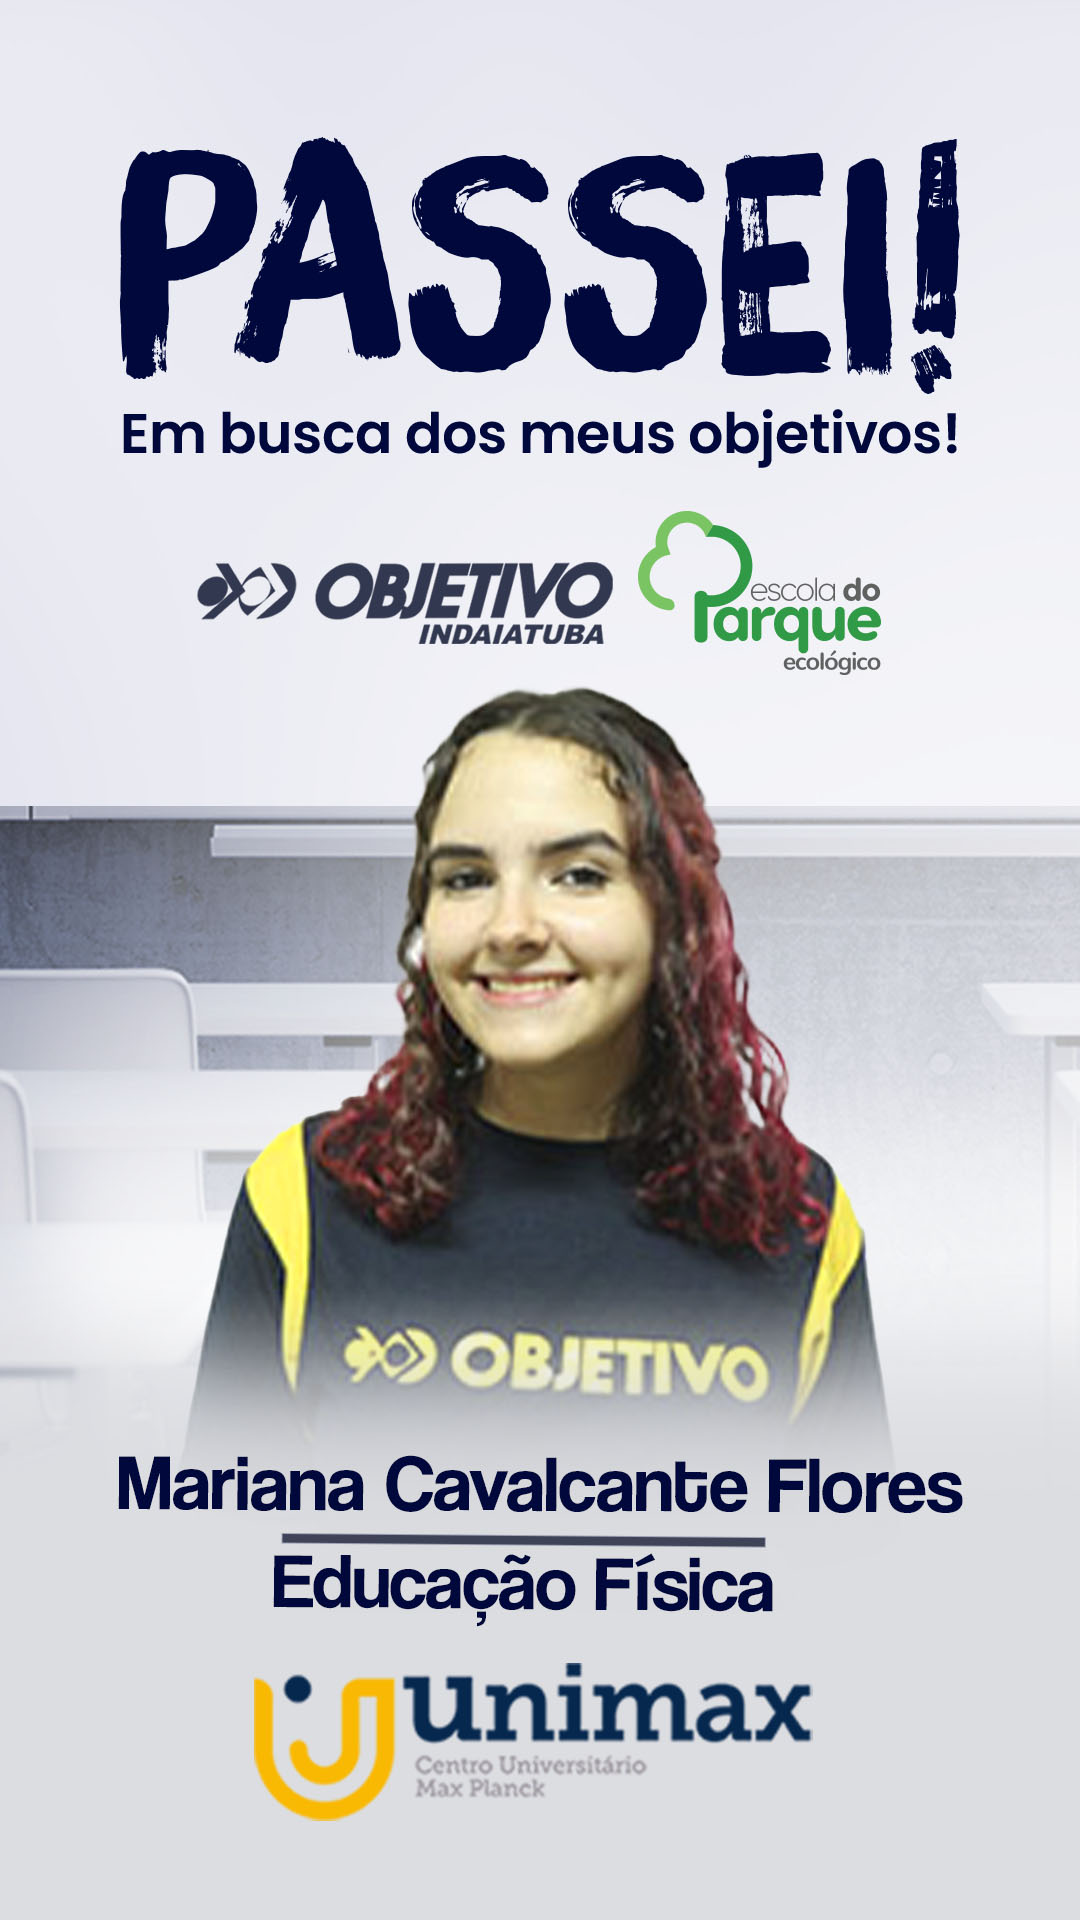 Mariana Cavalcante Flores